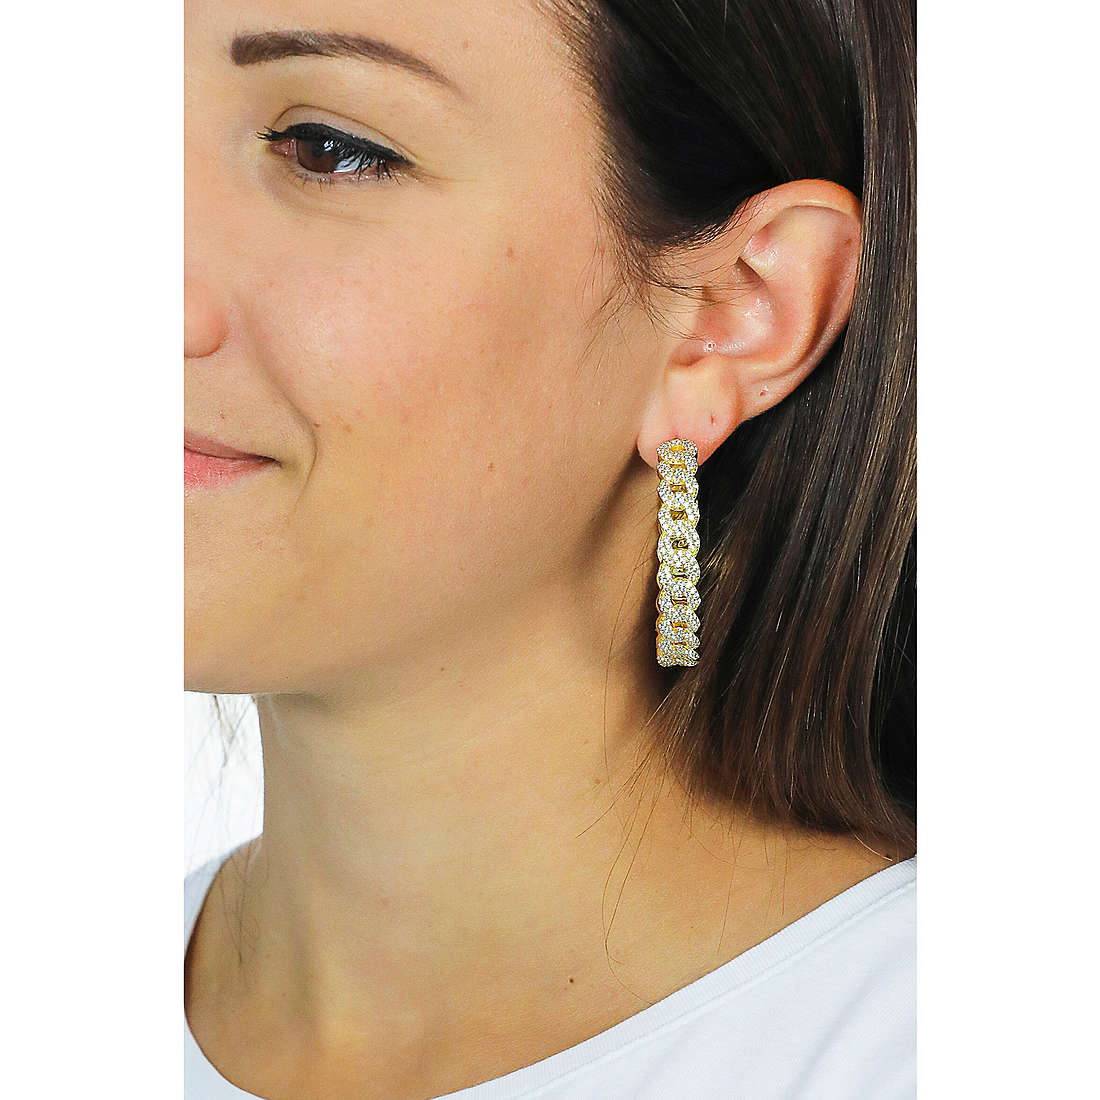 Michael Kors earrings Premium woman MKC1488AN710 wearing